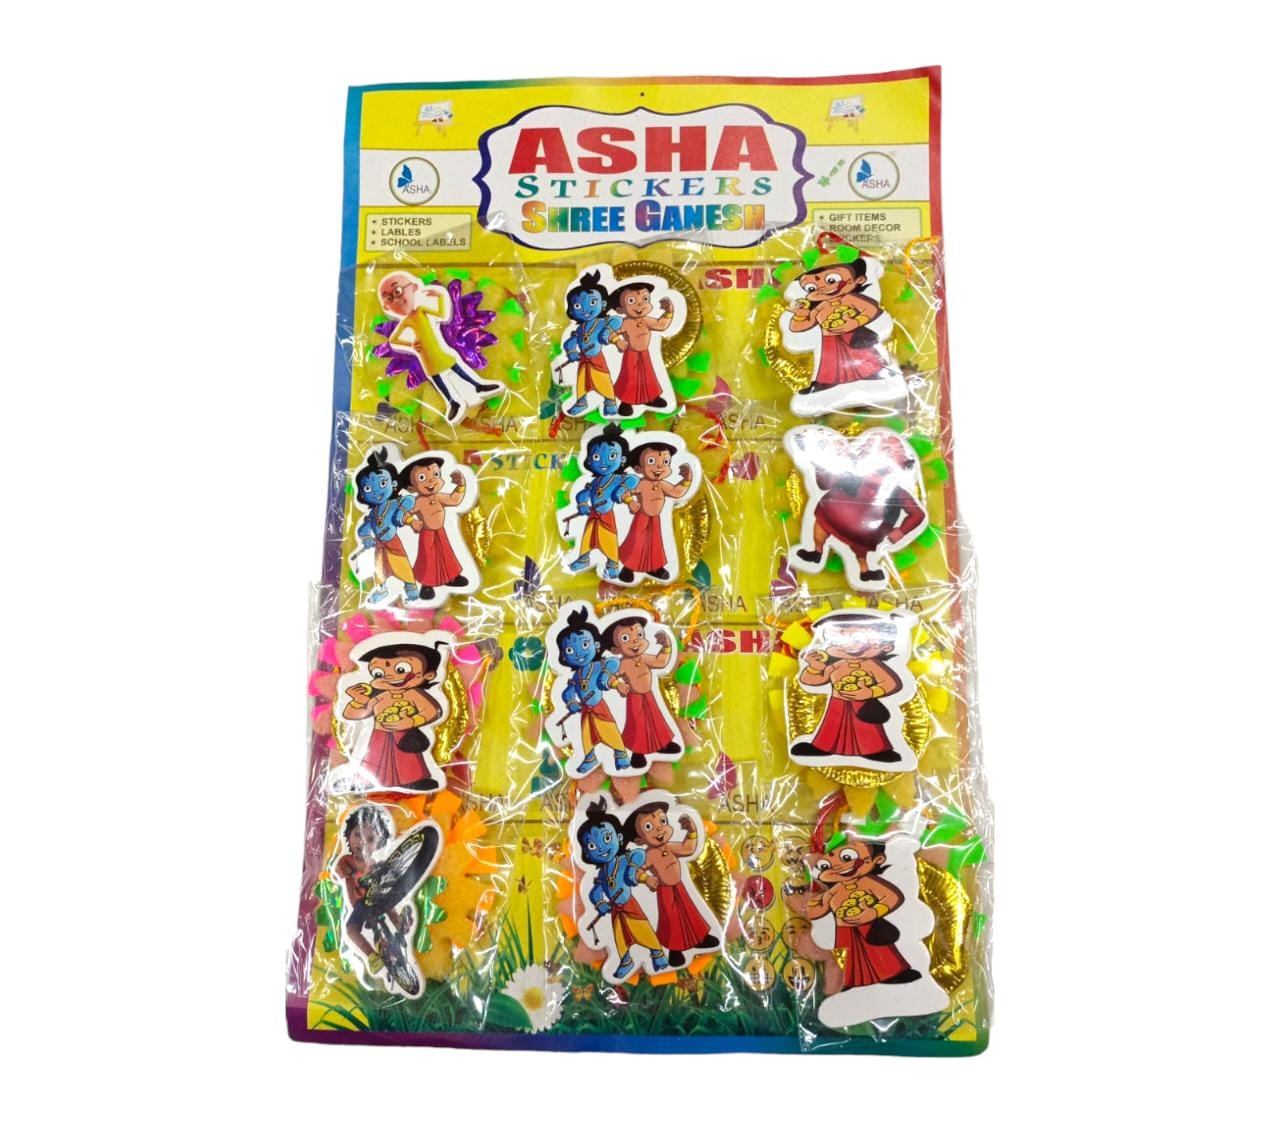 Asha stickers 